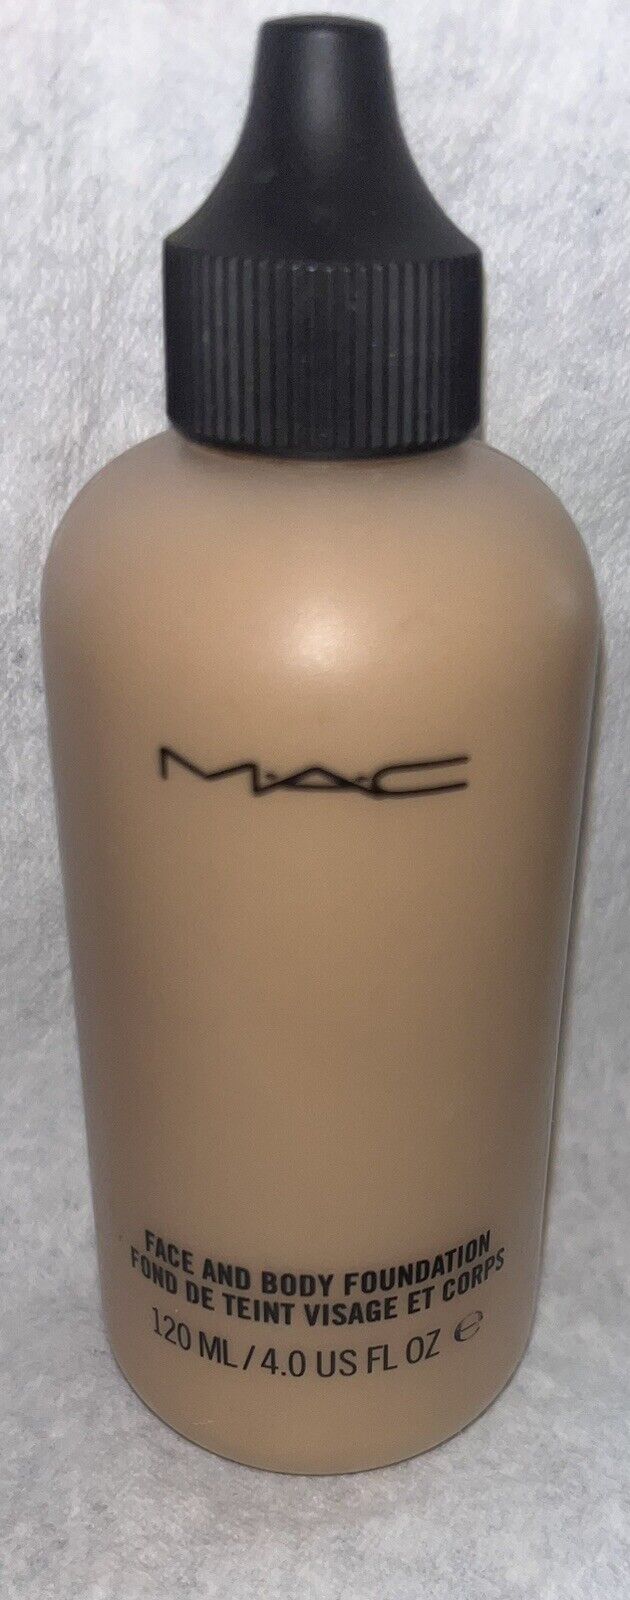 MAC Studio Face & Body Foundation C3 Jumbo Size 120 ml / 4.0 oz. Boxless